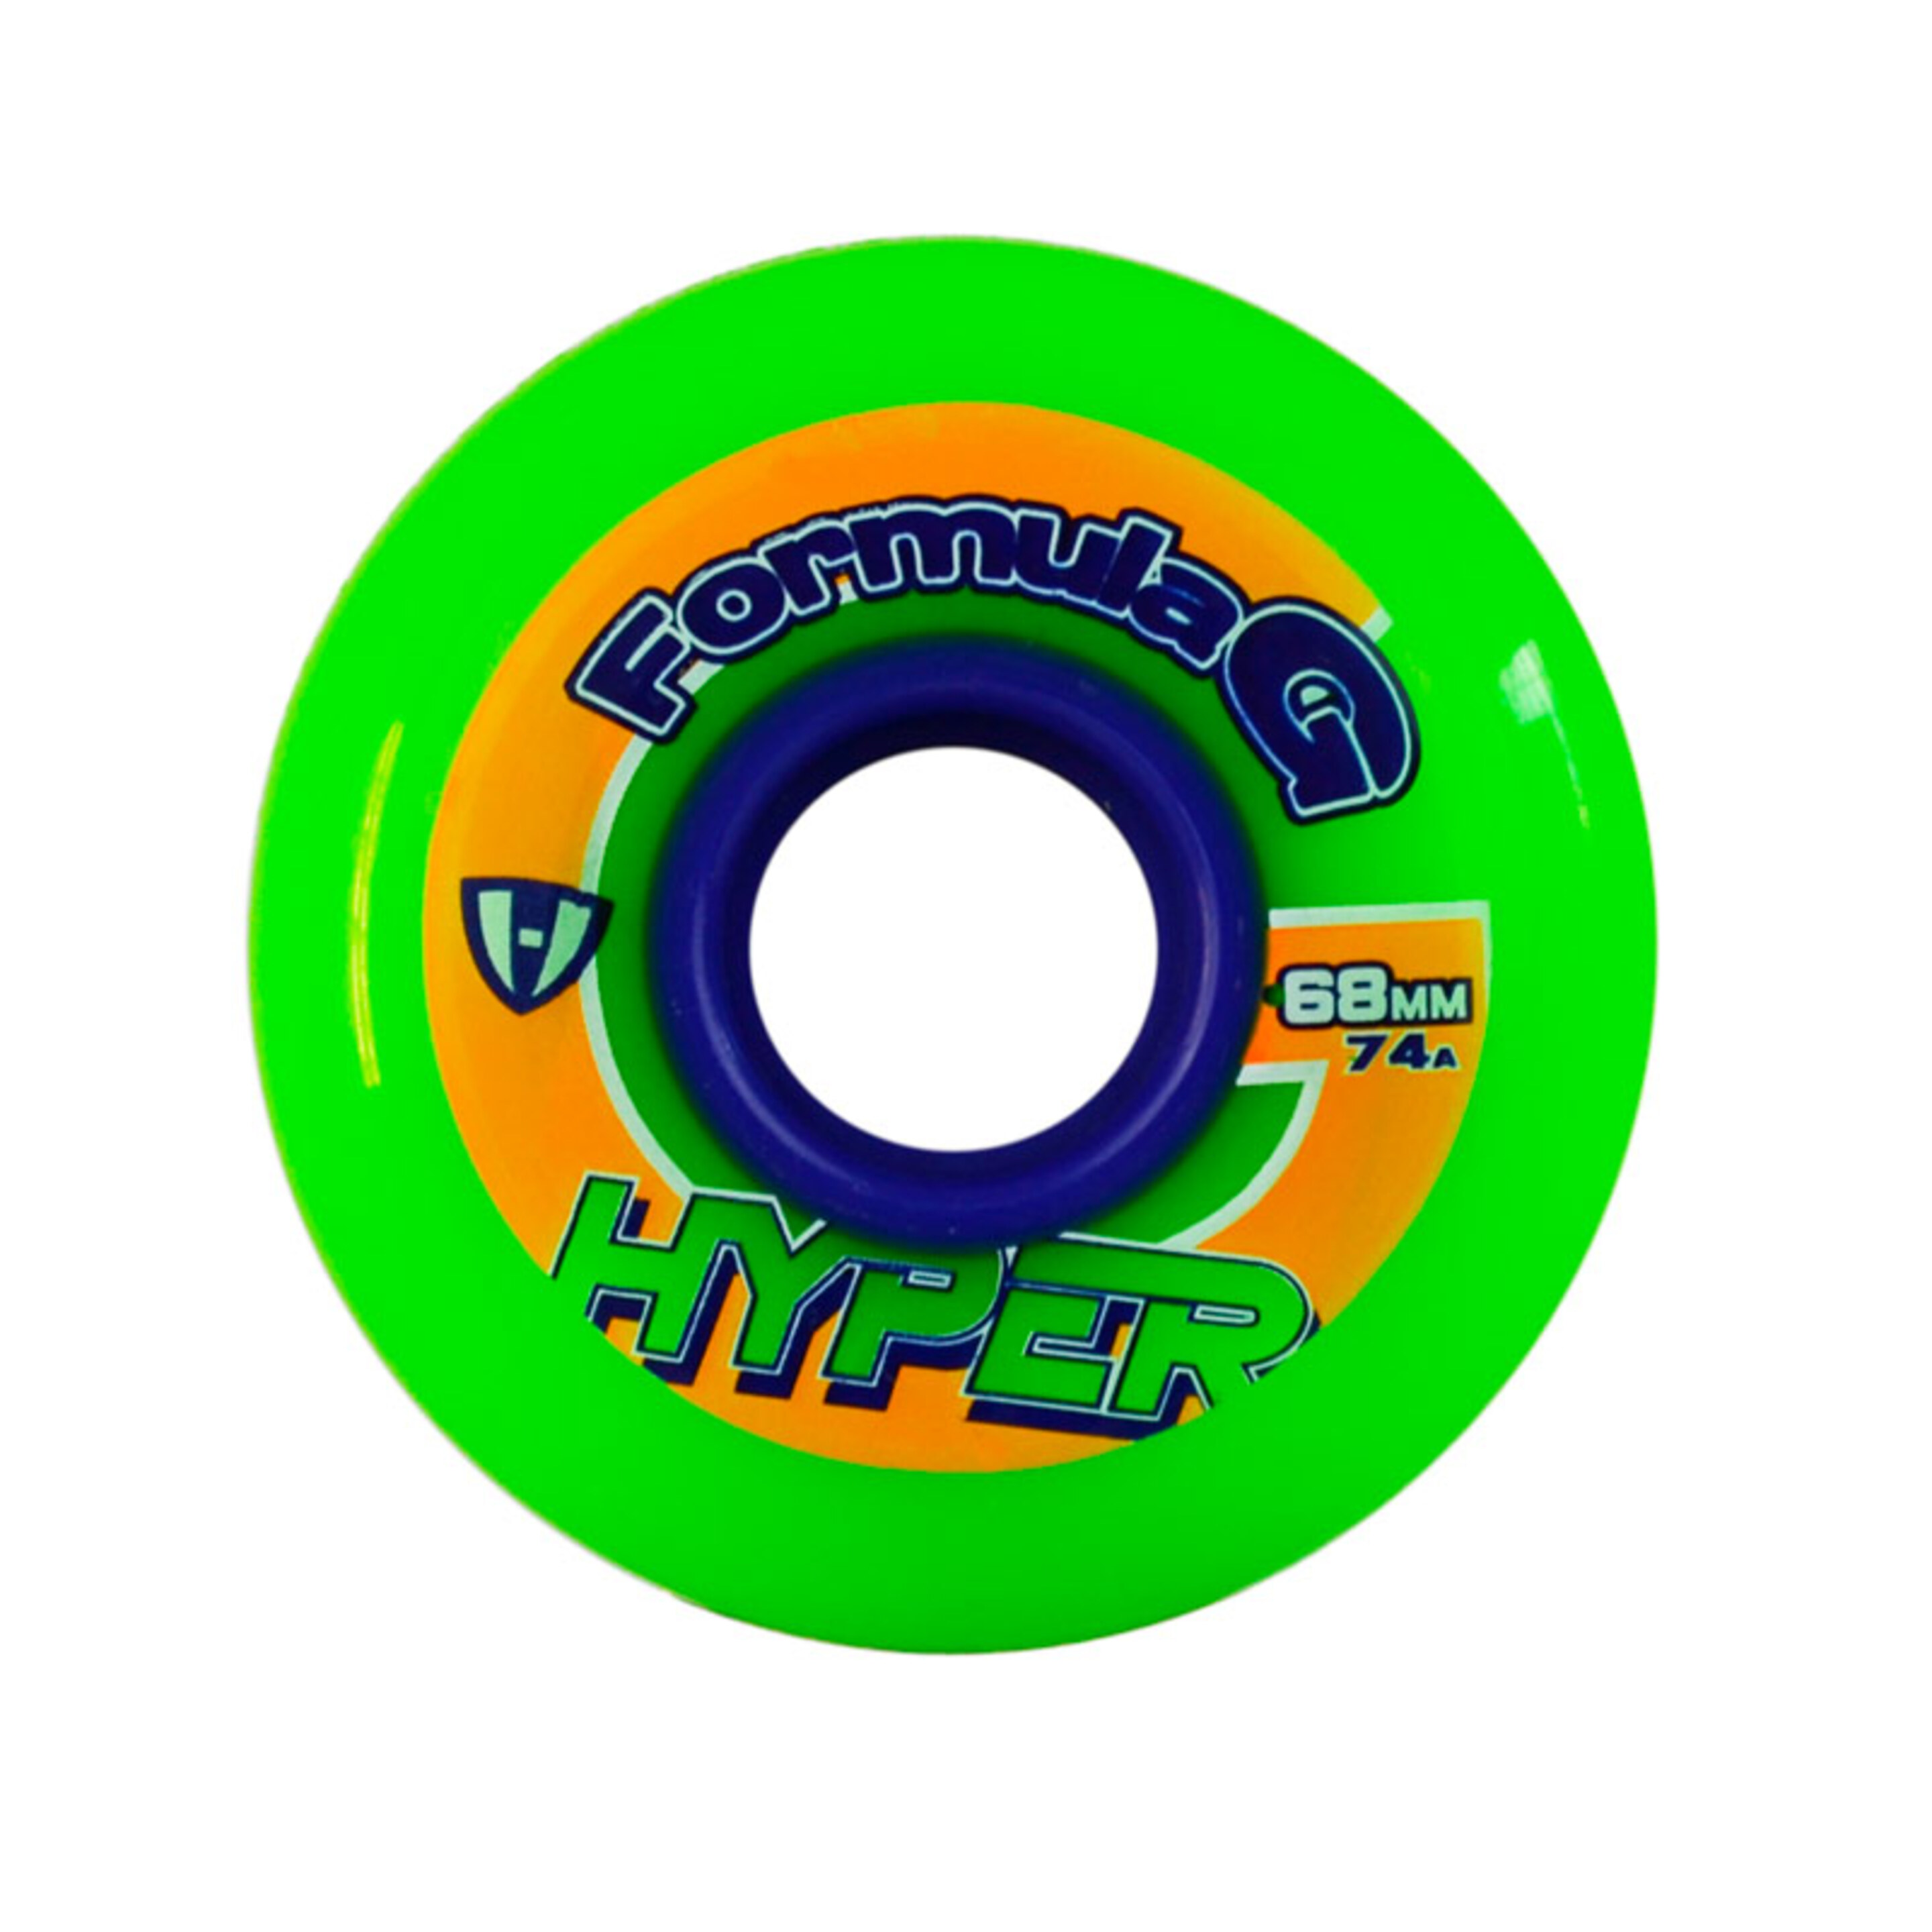 Rueda Hyper Patín Hockey Indoor Formula G Era 68mm-74a Verde 4 Ud - verde - 